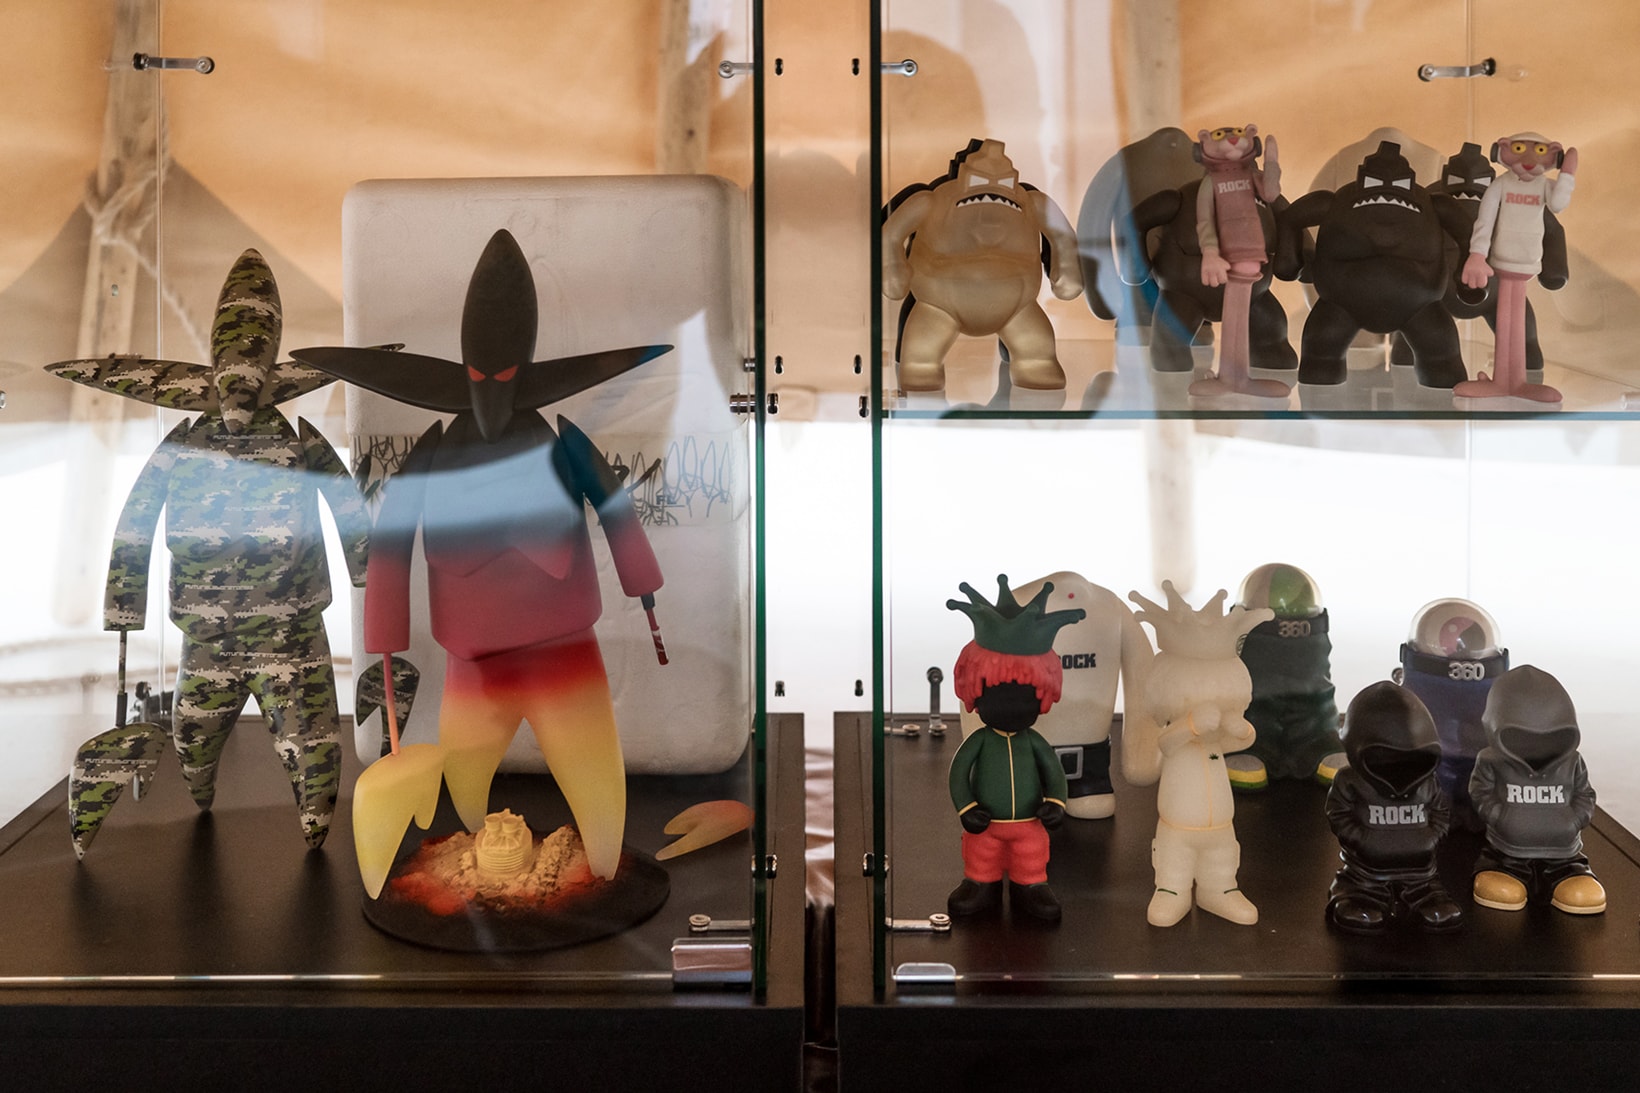 Jakuan Melendez Exhibit Sculptures Artwork Vinyl Toys Collectibles Figures BAPE Supreme Bounty Hunter Futura KAWS Companion